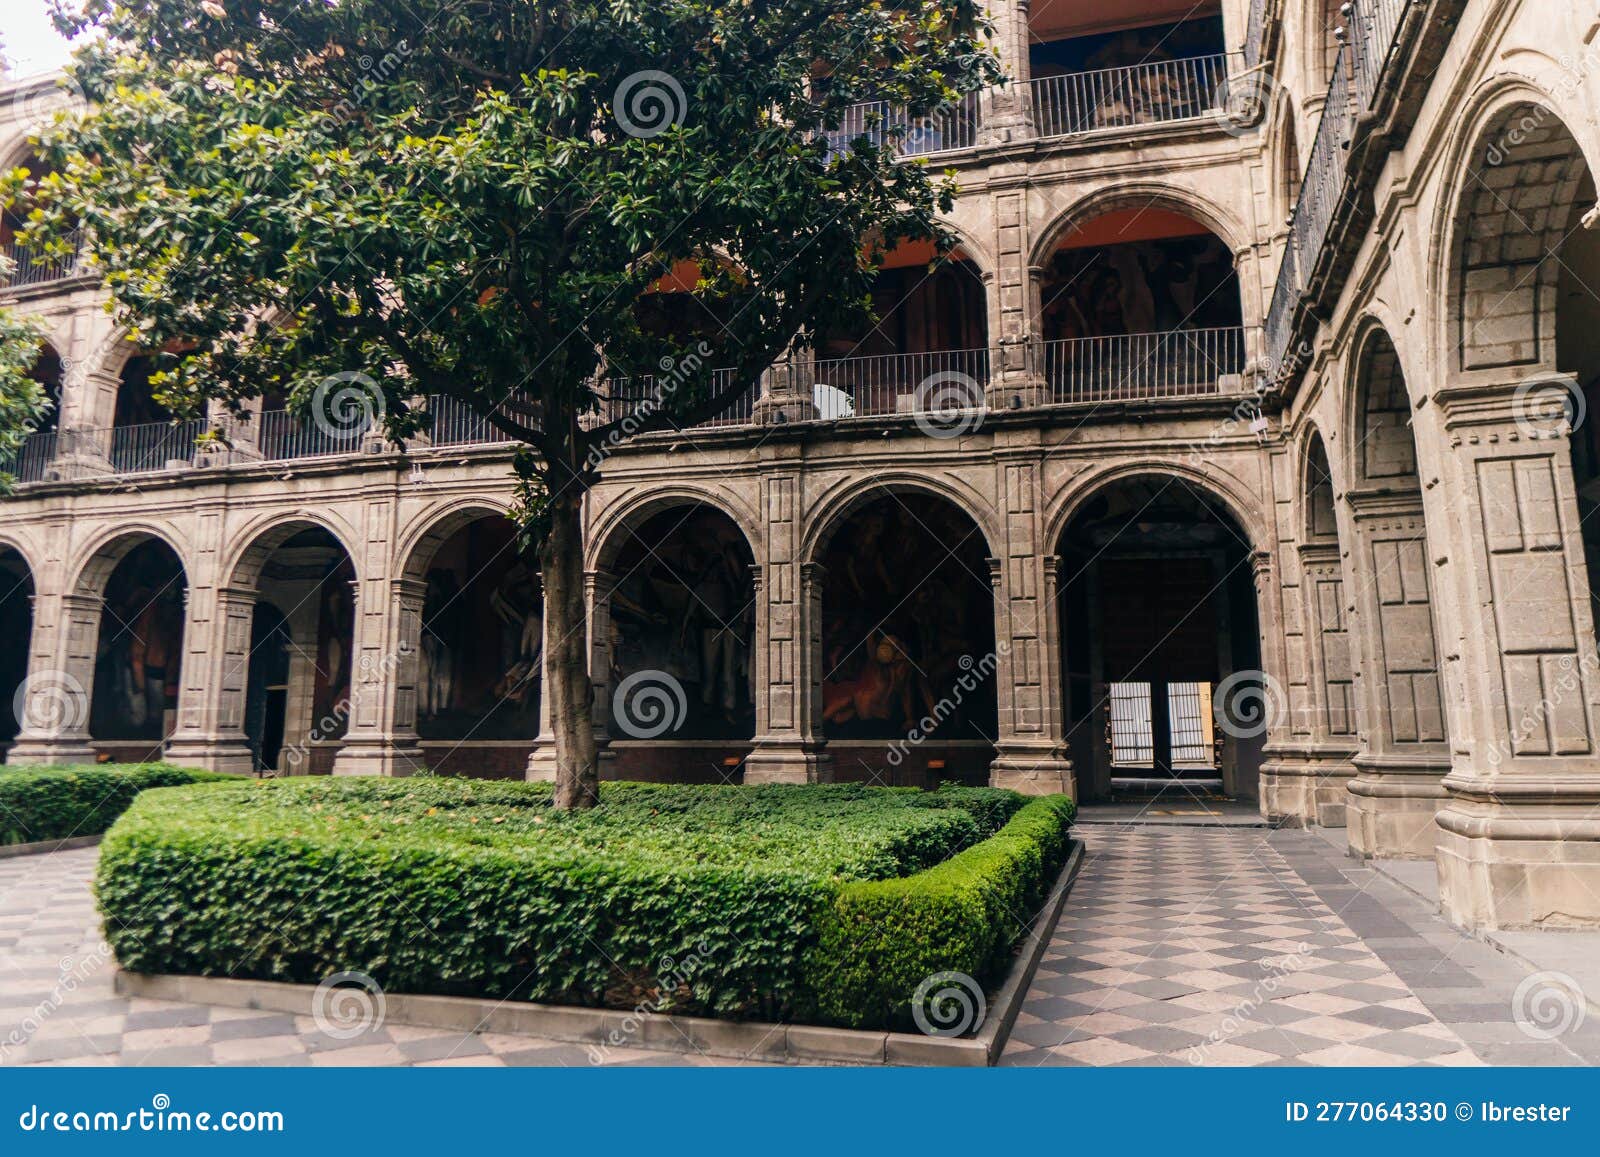 cdmx mexico city 2023 may. old custom ex antigua aduana, antiguo colegio de san ildefonso